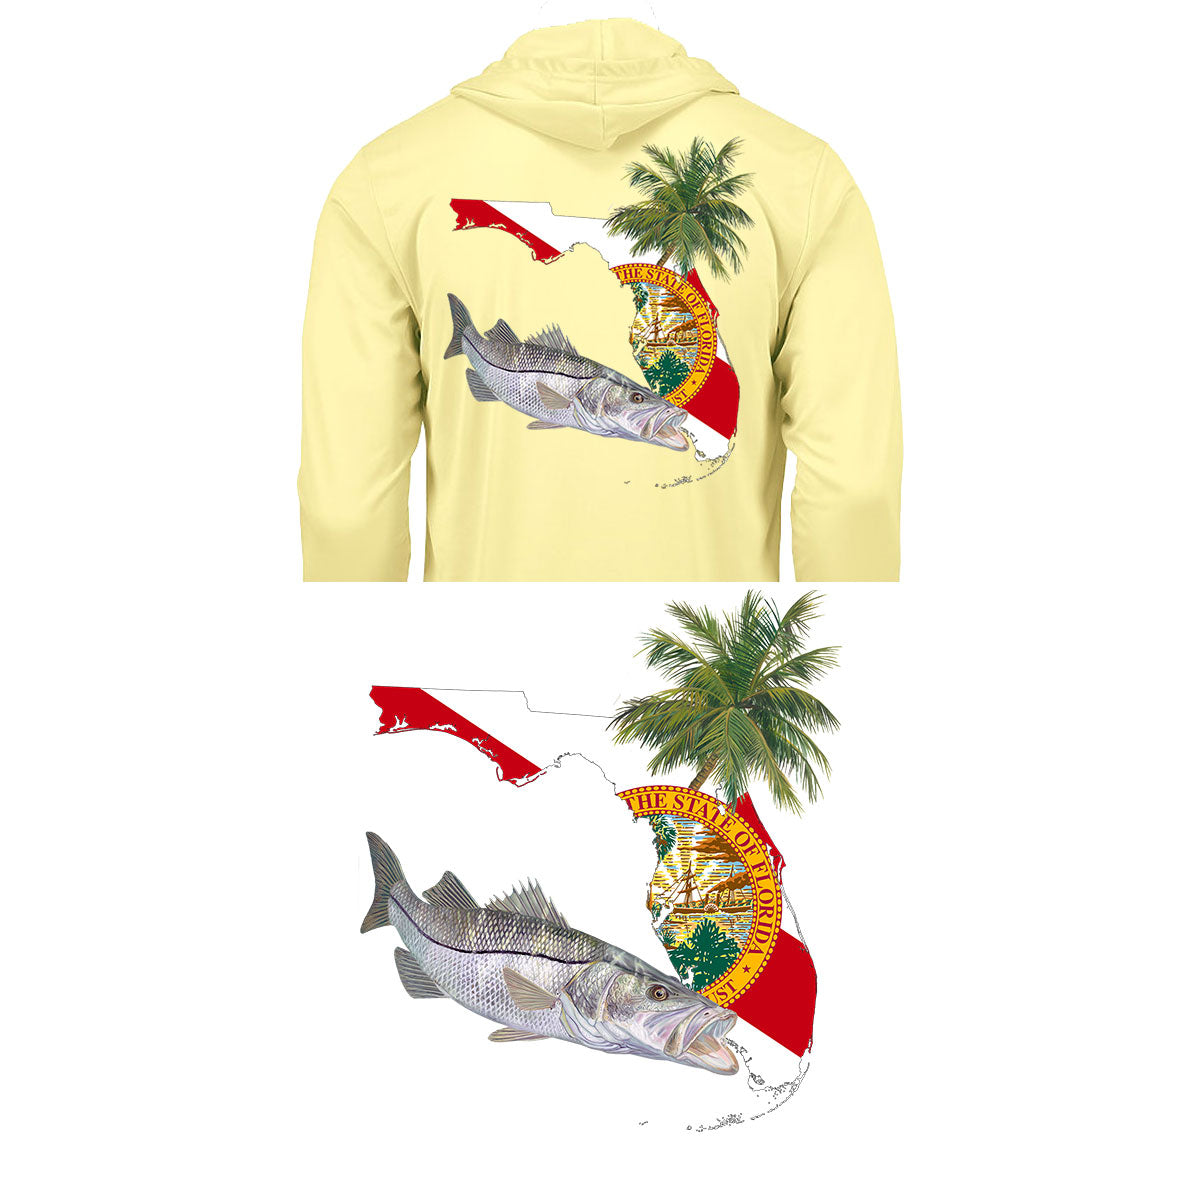 Hoodie Snook Florida Fishing Shirt with FL State Flag Sleeve - Skiff Life